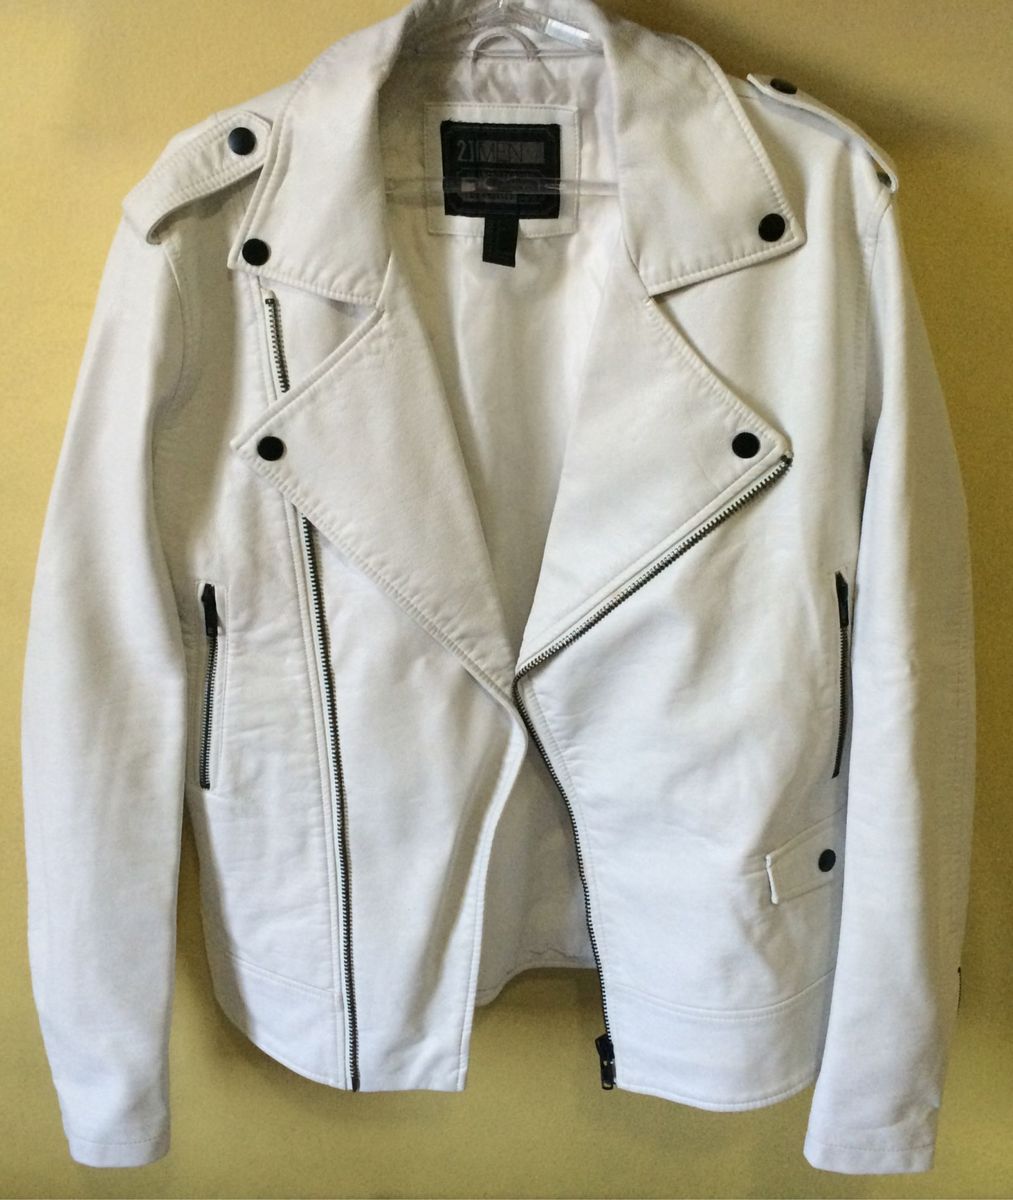 jaqueta couro branca masculina